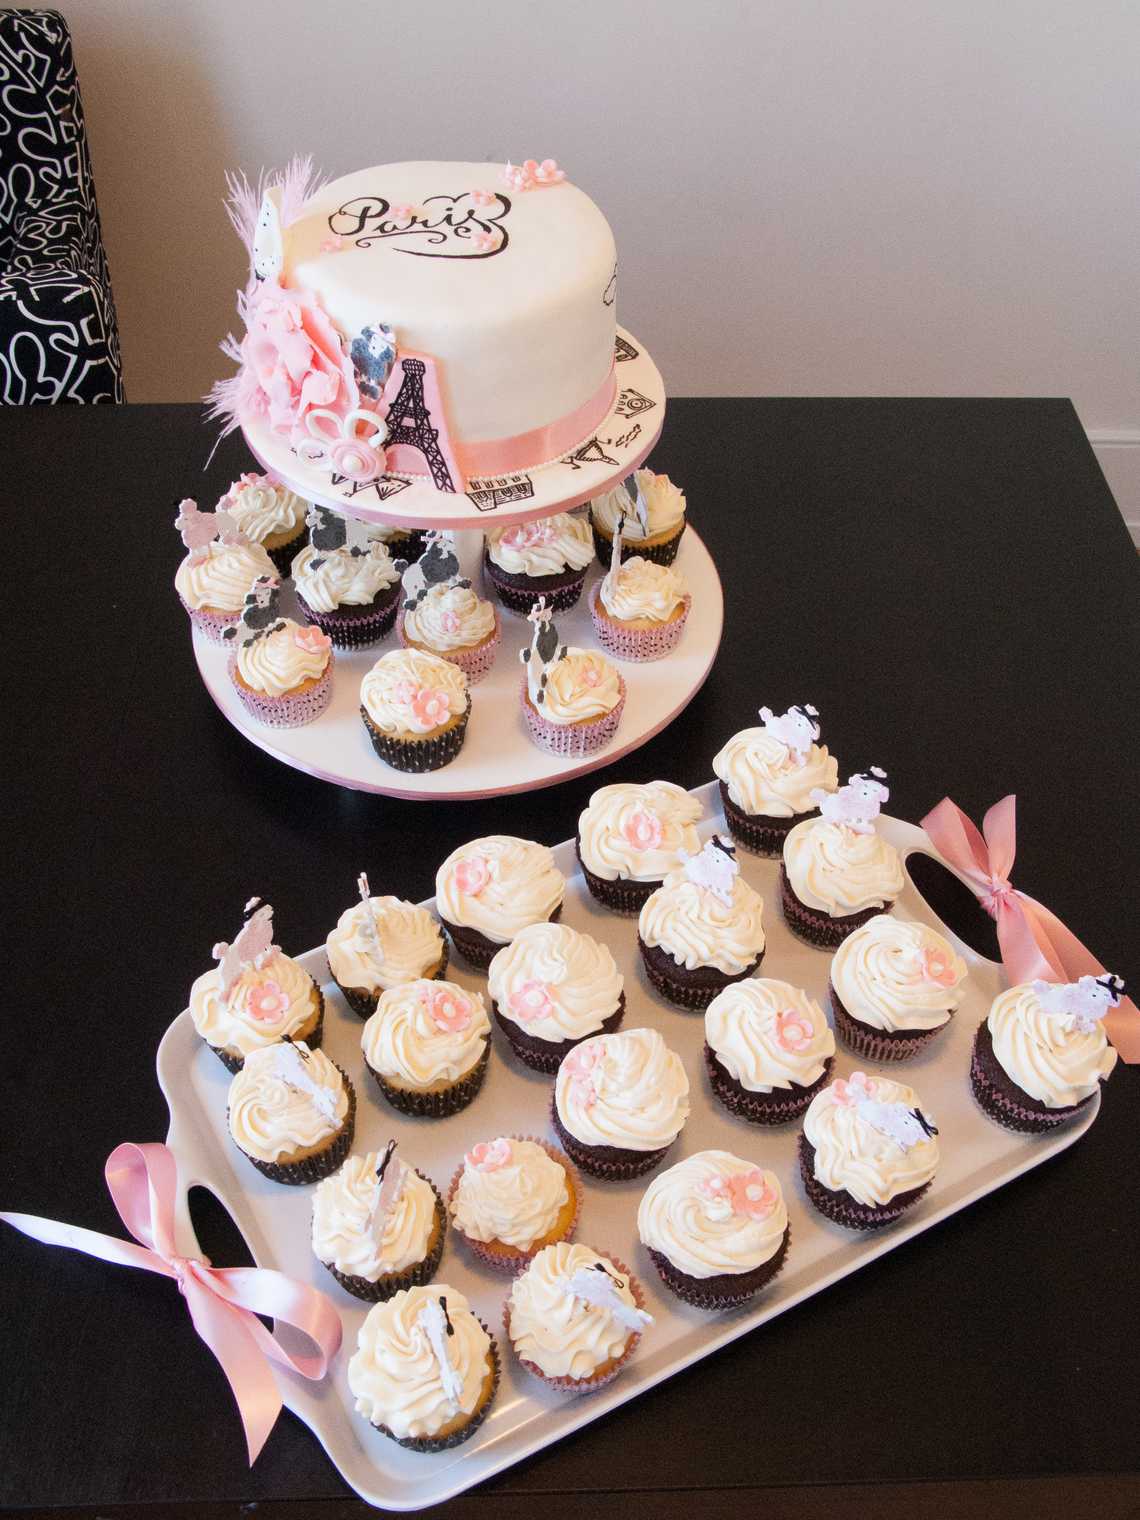 Paris Cake and Set of Cupcakes — February 1, 2013